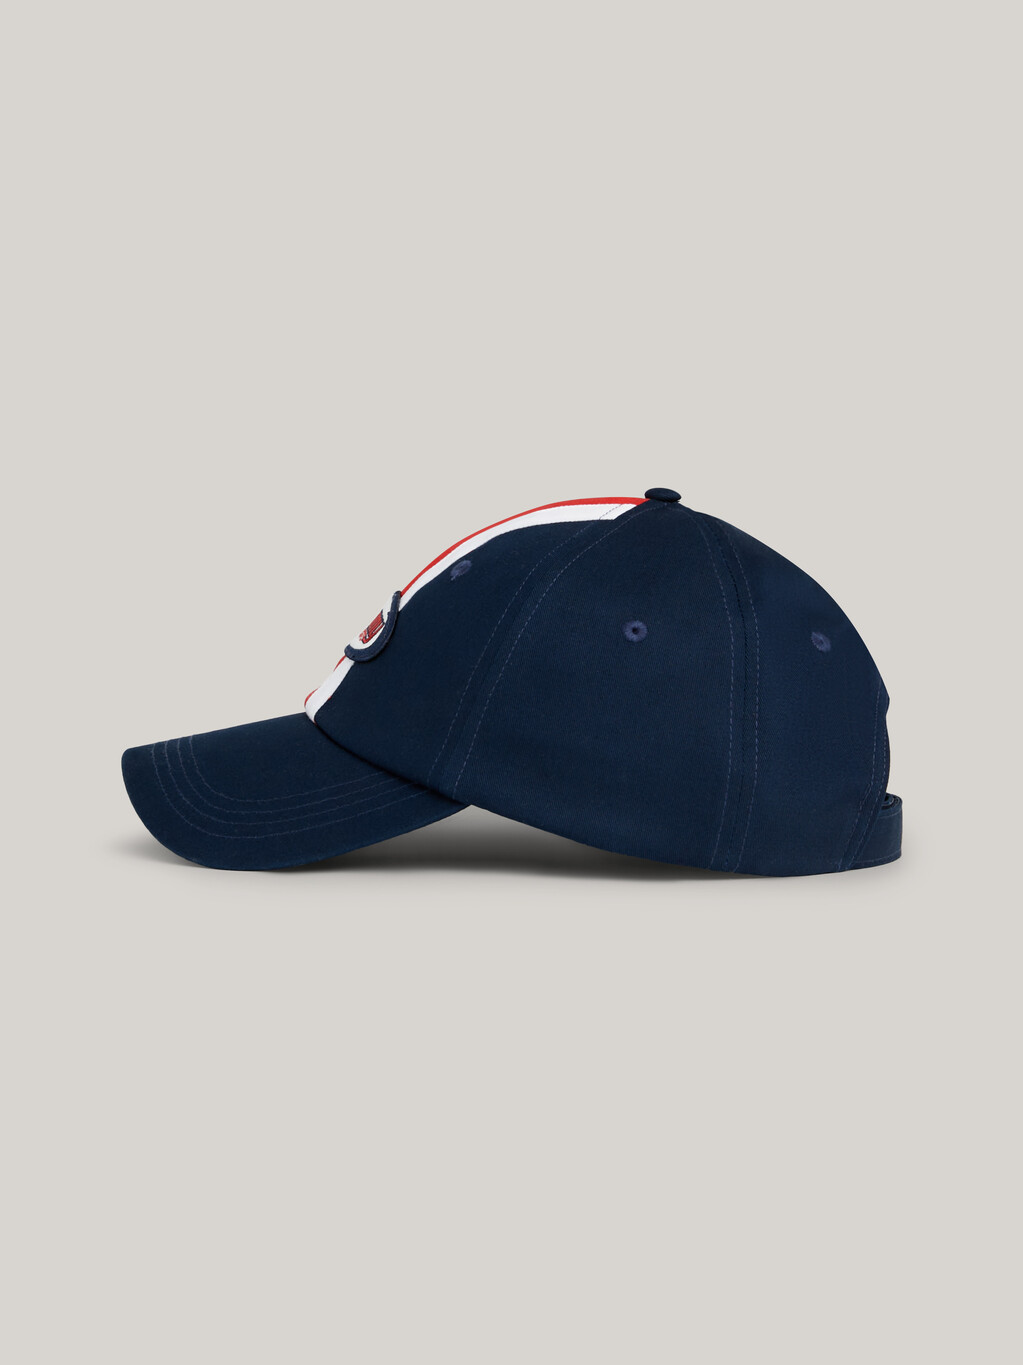 Prep Logo棒球帽, Dark Night Navy, hi-res